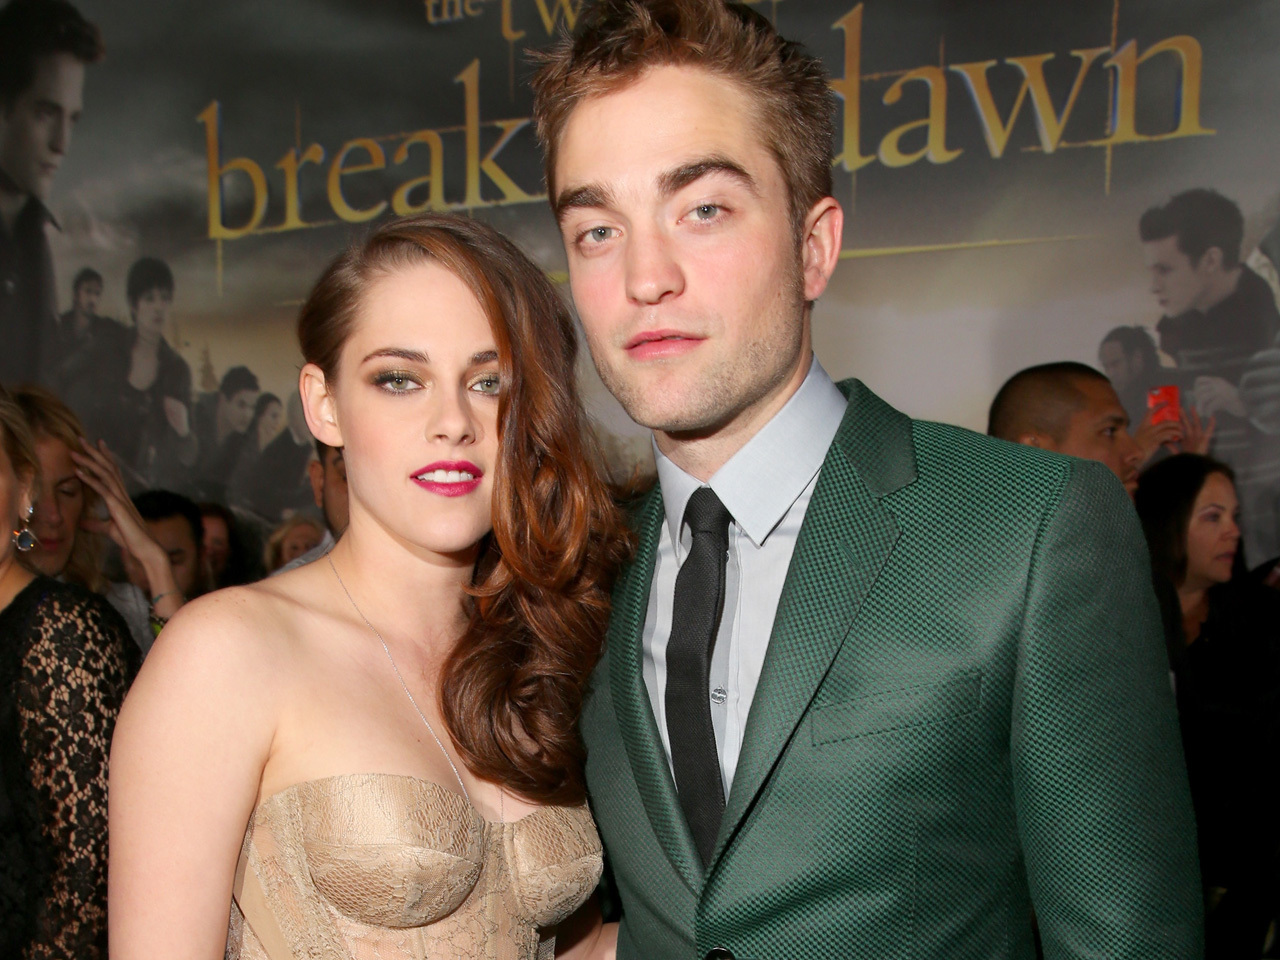 Kristen Stewart and Robert Pattinson step out at "Breaking Dawn